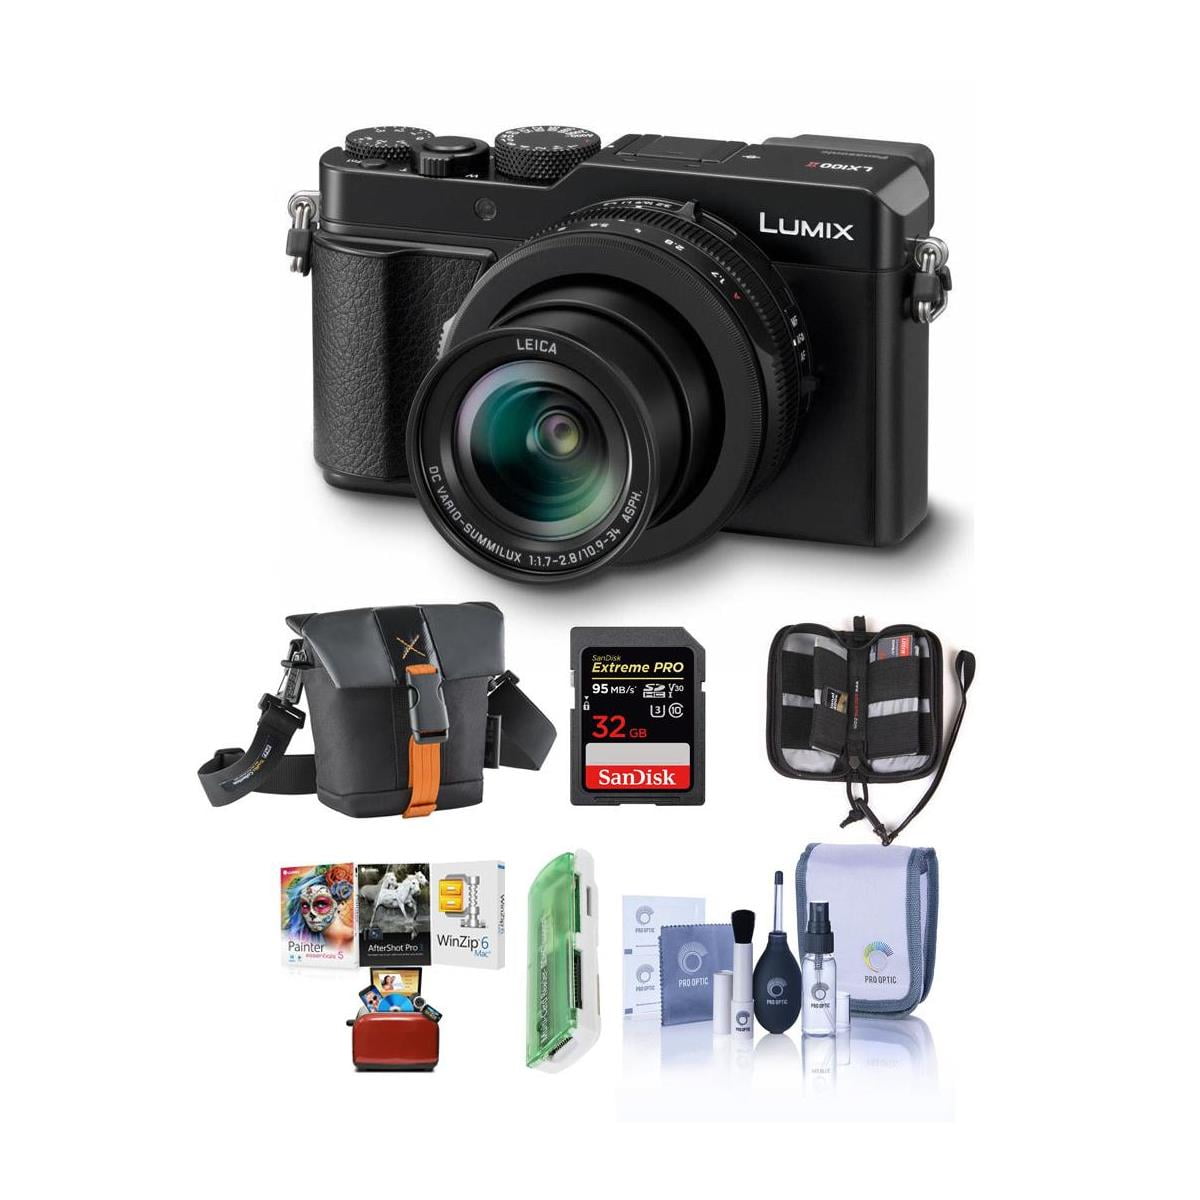 DC-LX100 II Lumix DC-G9 Gadget Place Compact Camera Handle for Panasonic Lumix GX9